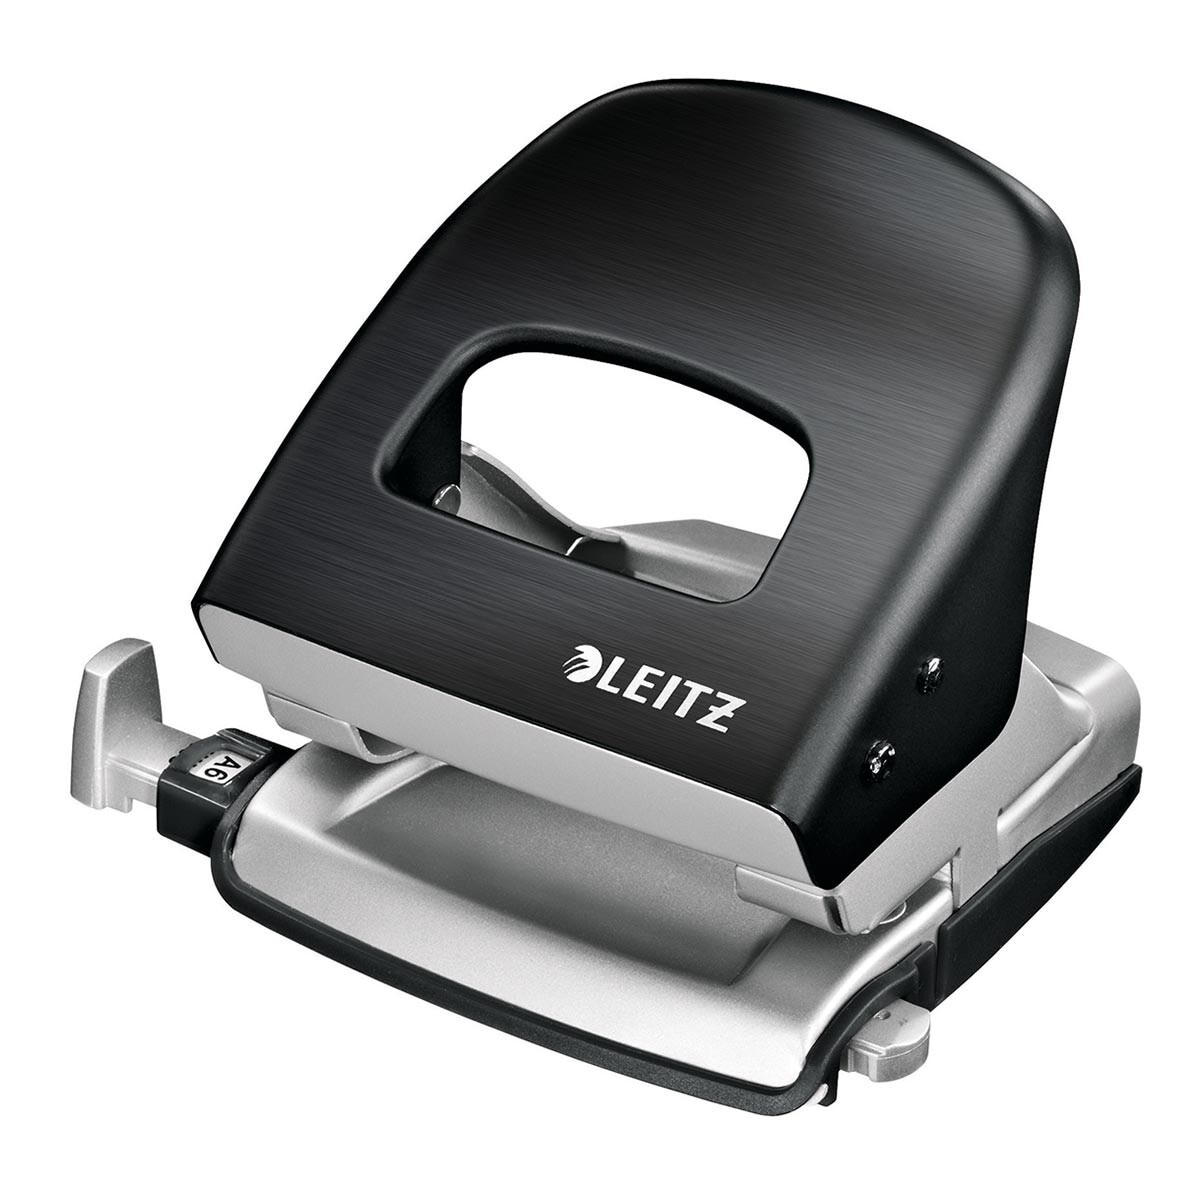 Leitz Style系列桌上型打孔機 LZ5006-00 鍛黑色